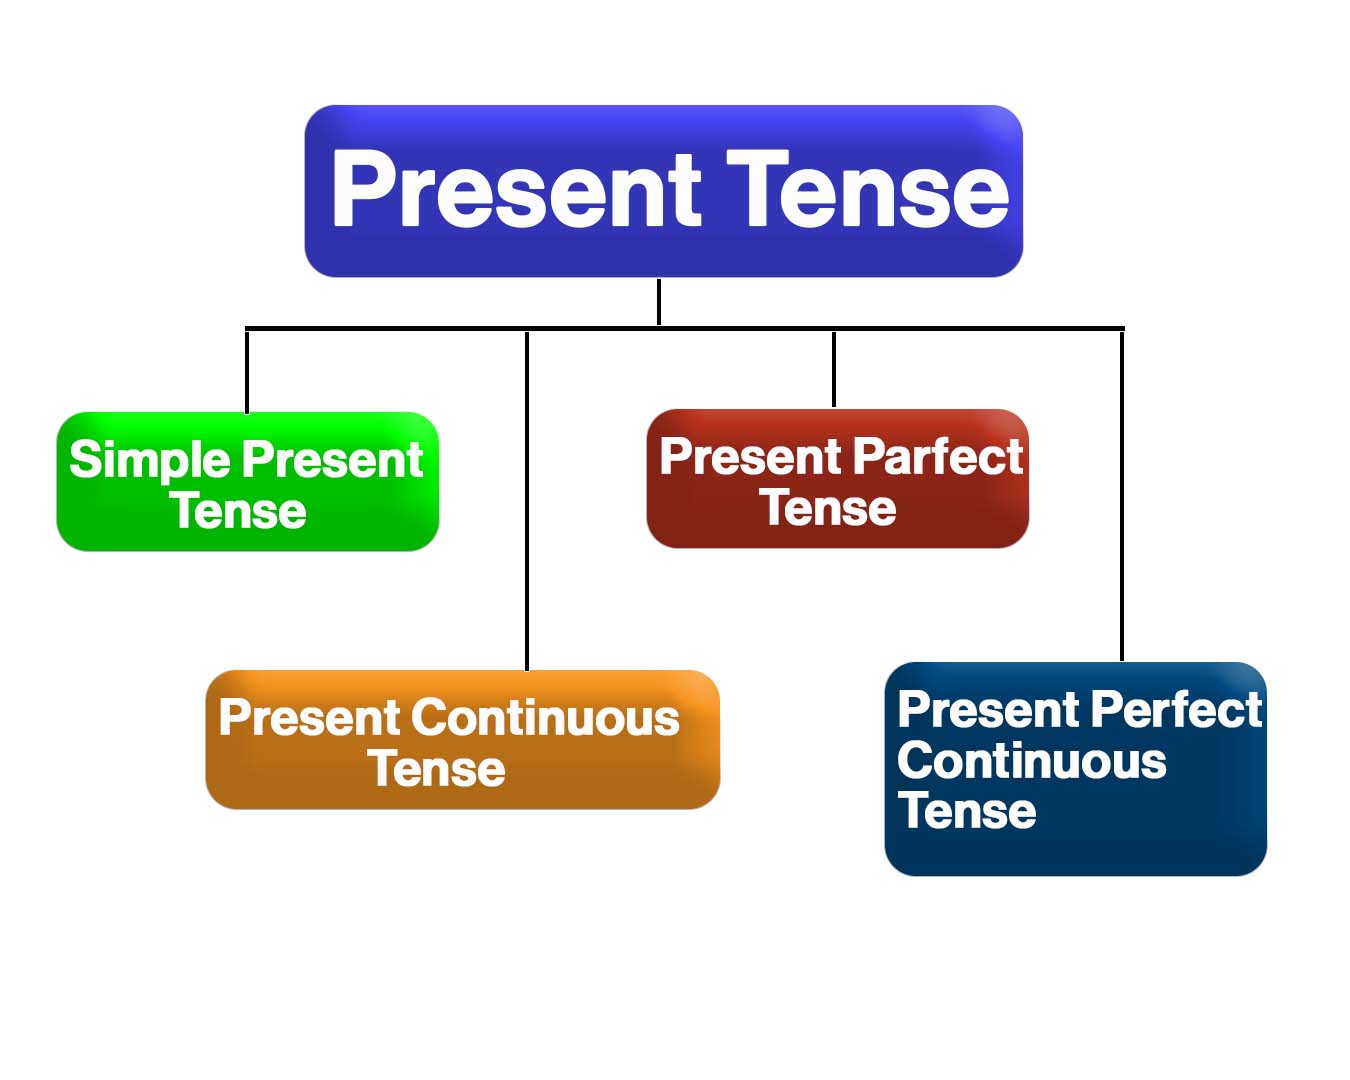 present-tense-example-in-hindi-types-of-present-tense-sentences